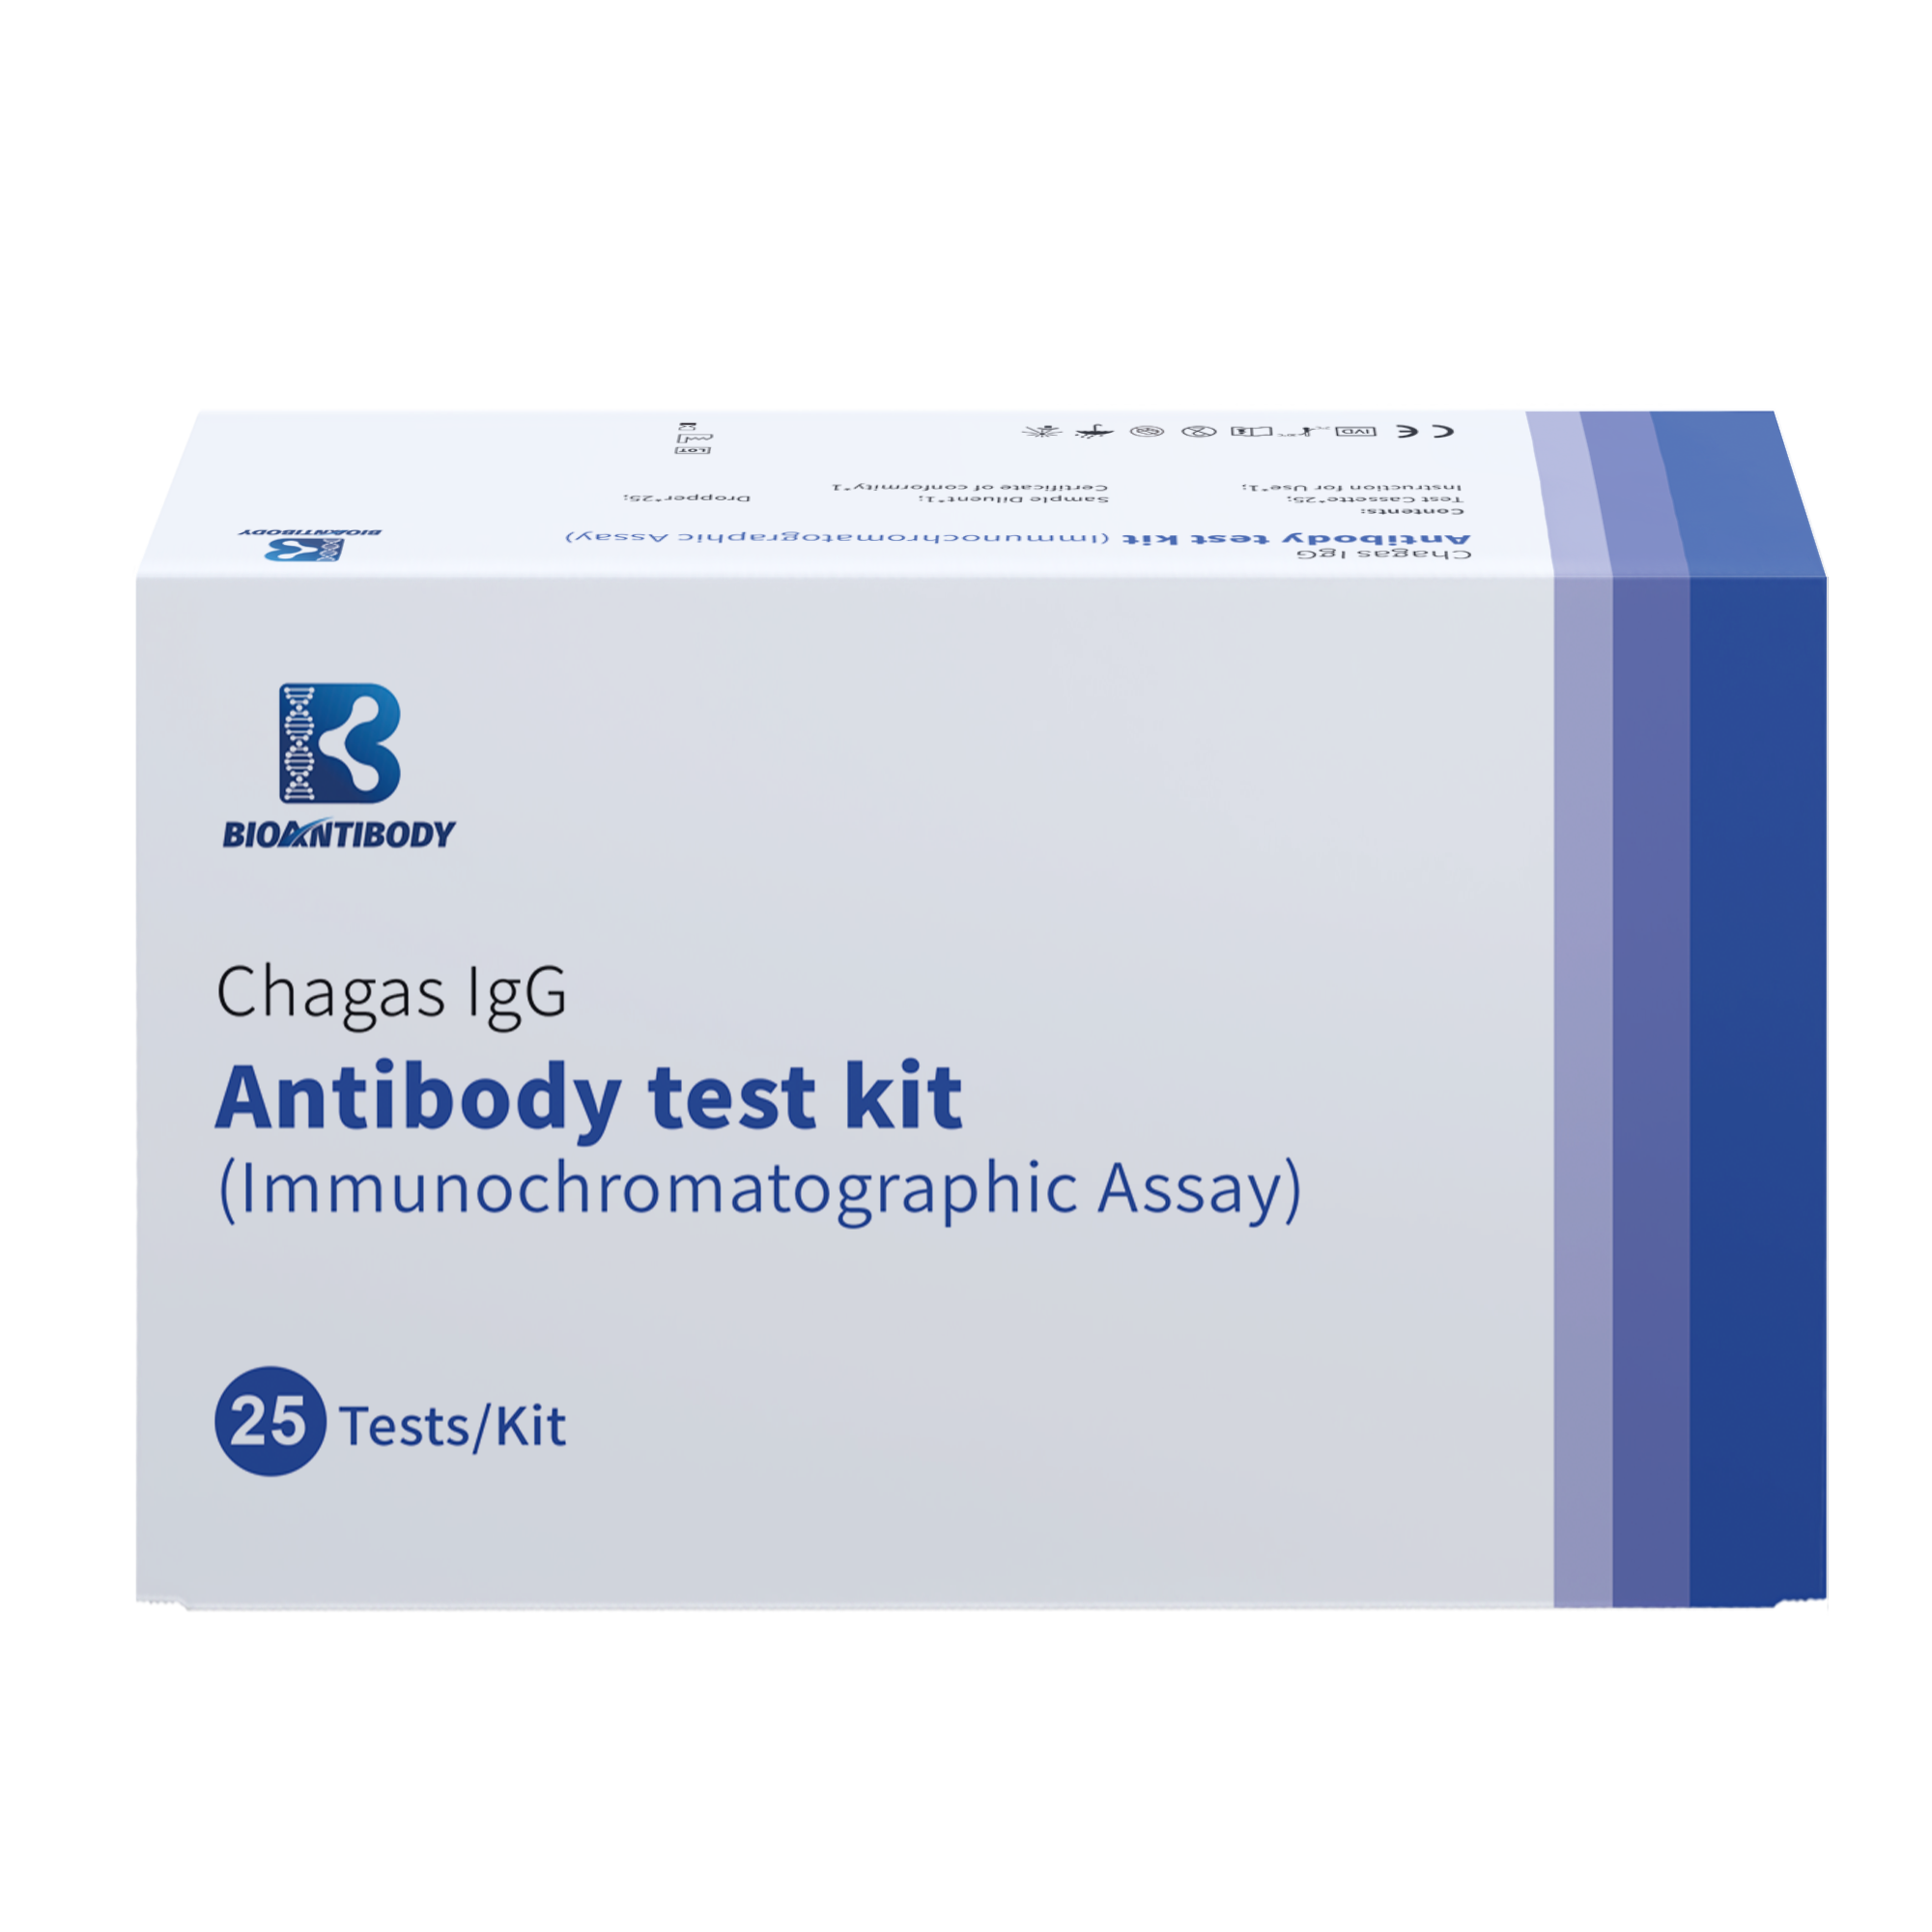 Chagas IgG Antibody test kit (Immunochromatographic Assay)